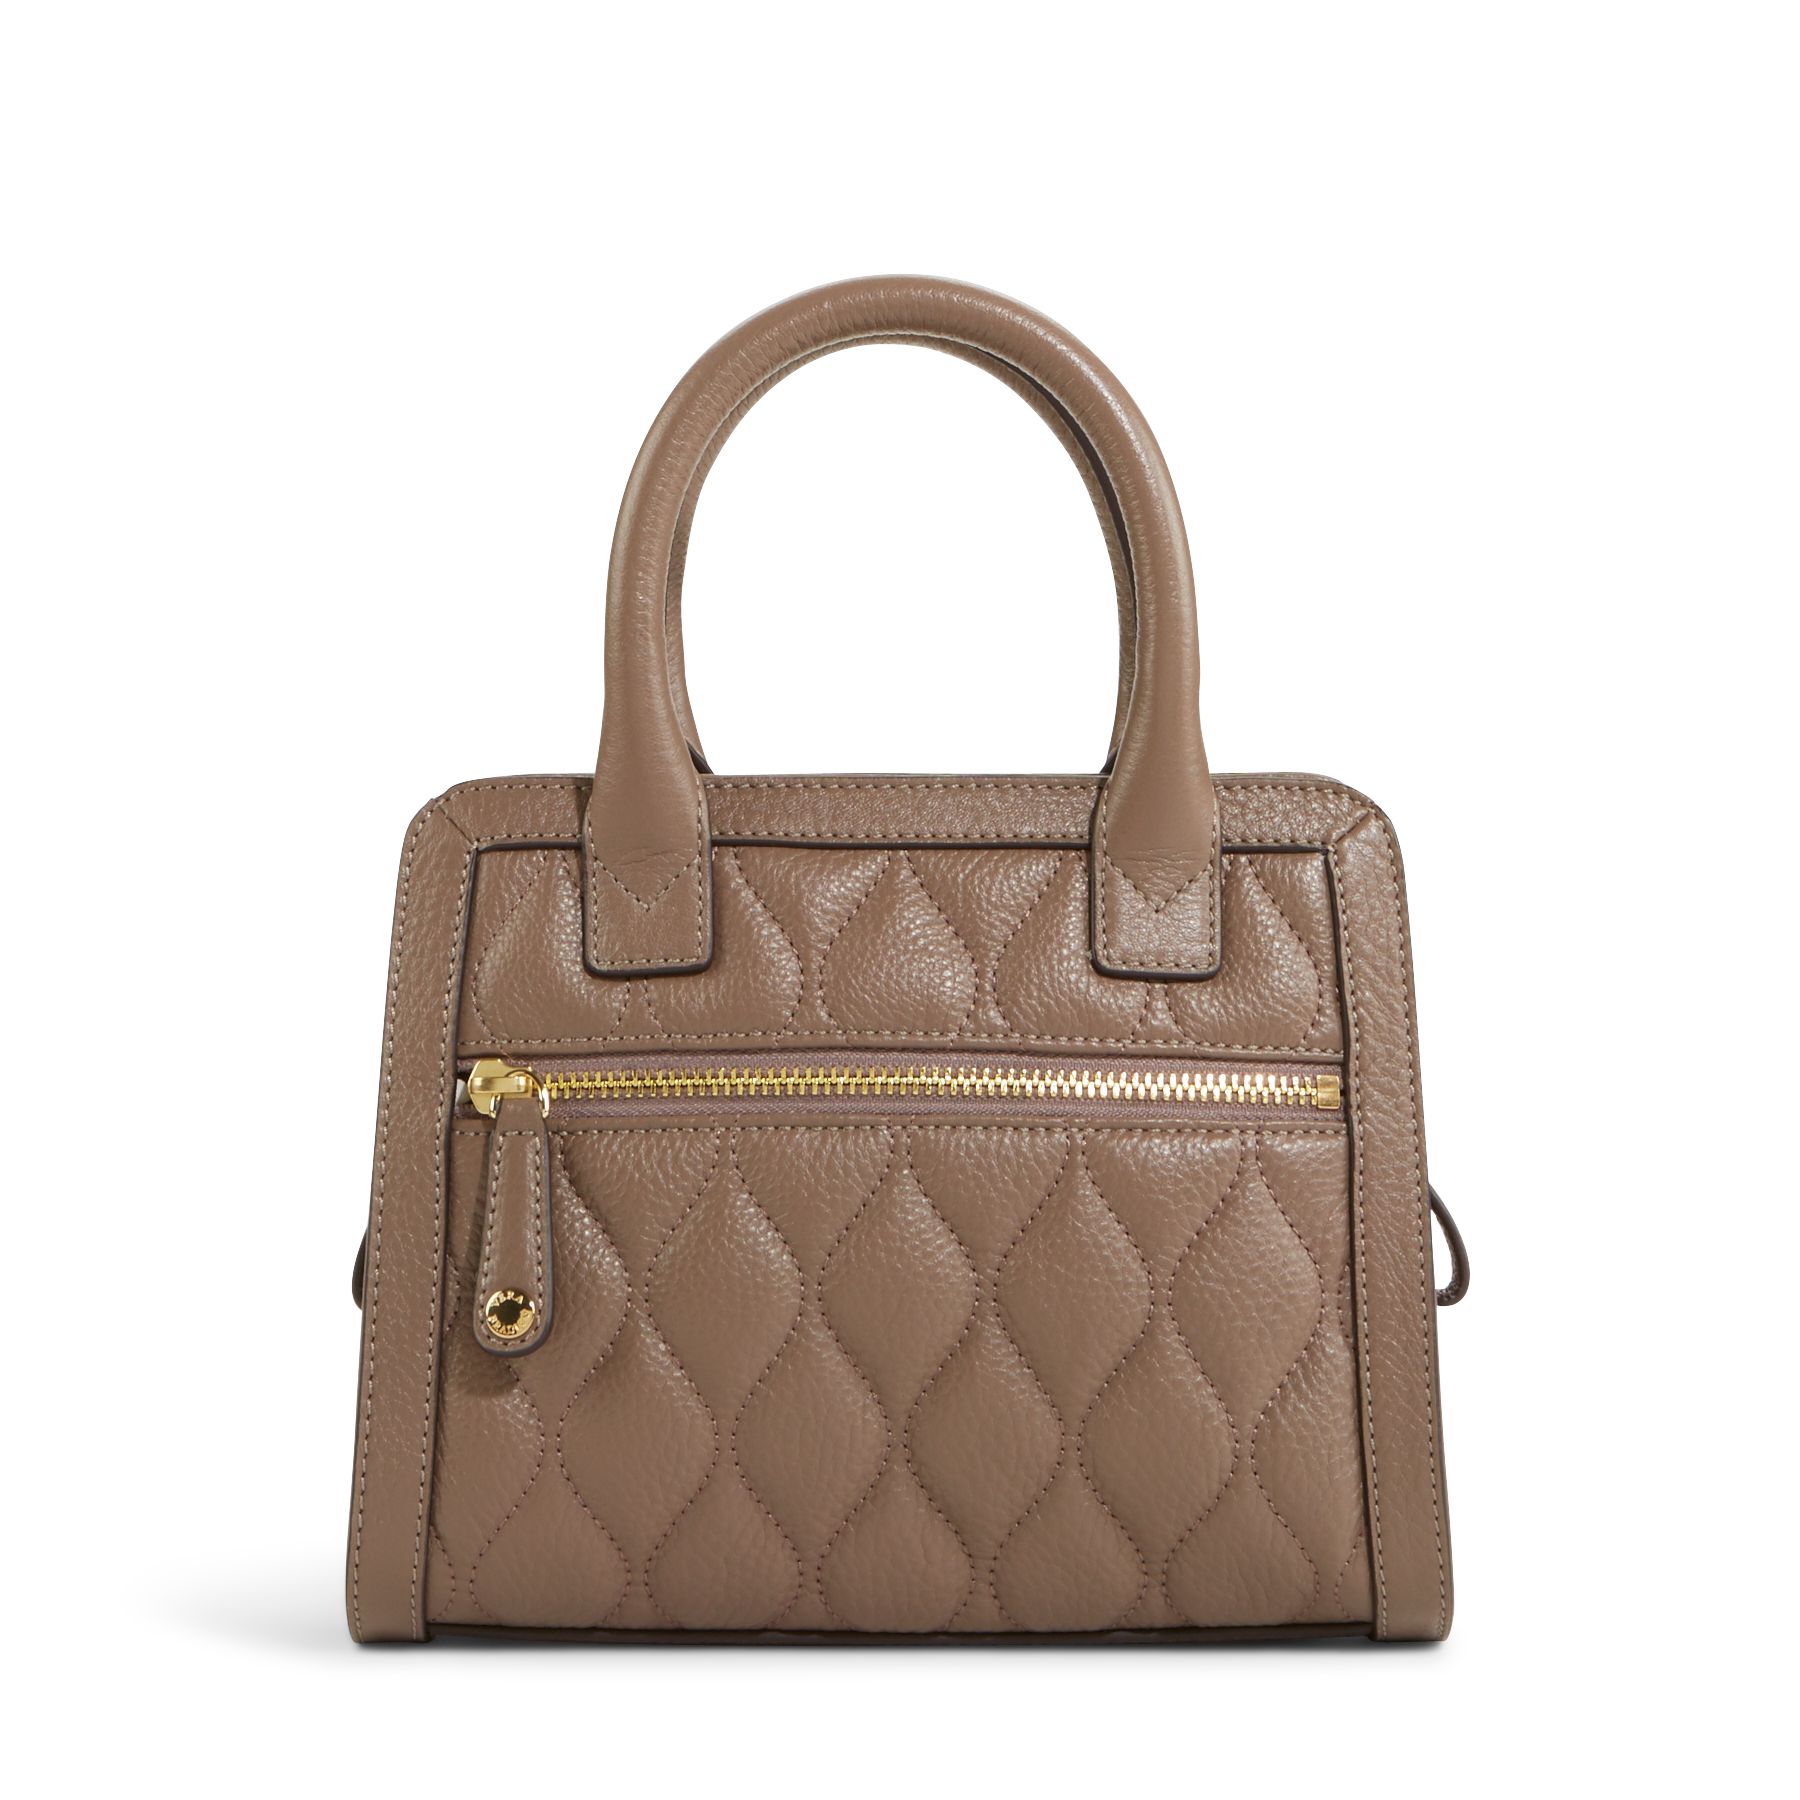 Vera Bradley Quilted Leather Natalie Crossbody Bag | eBay